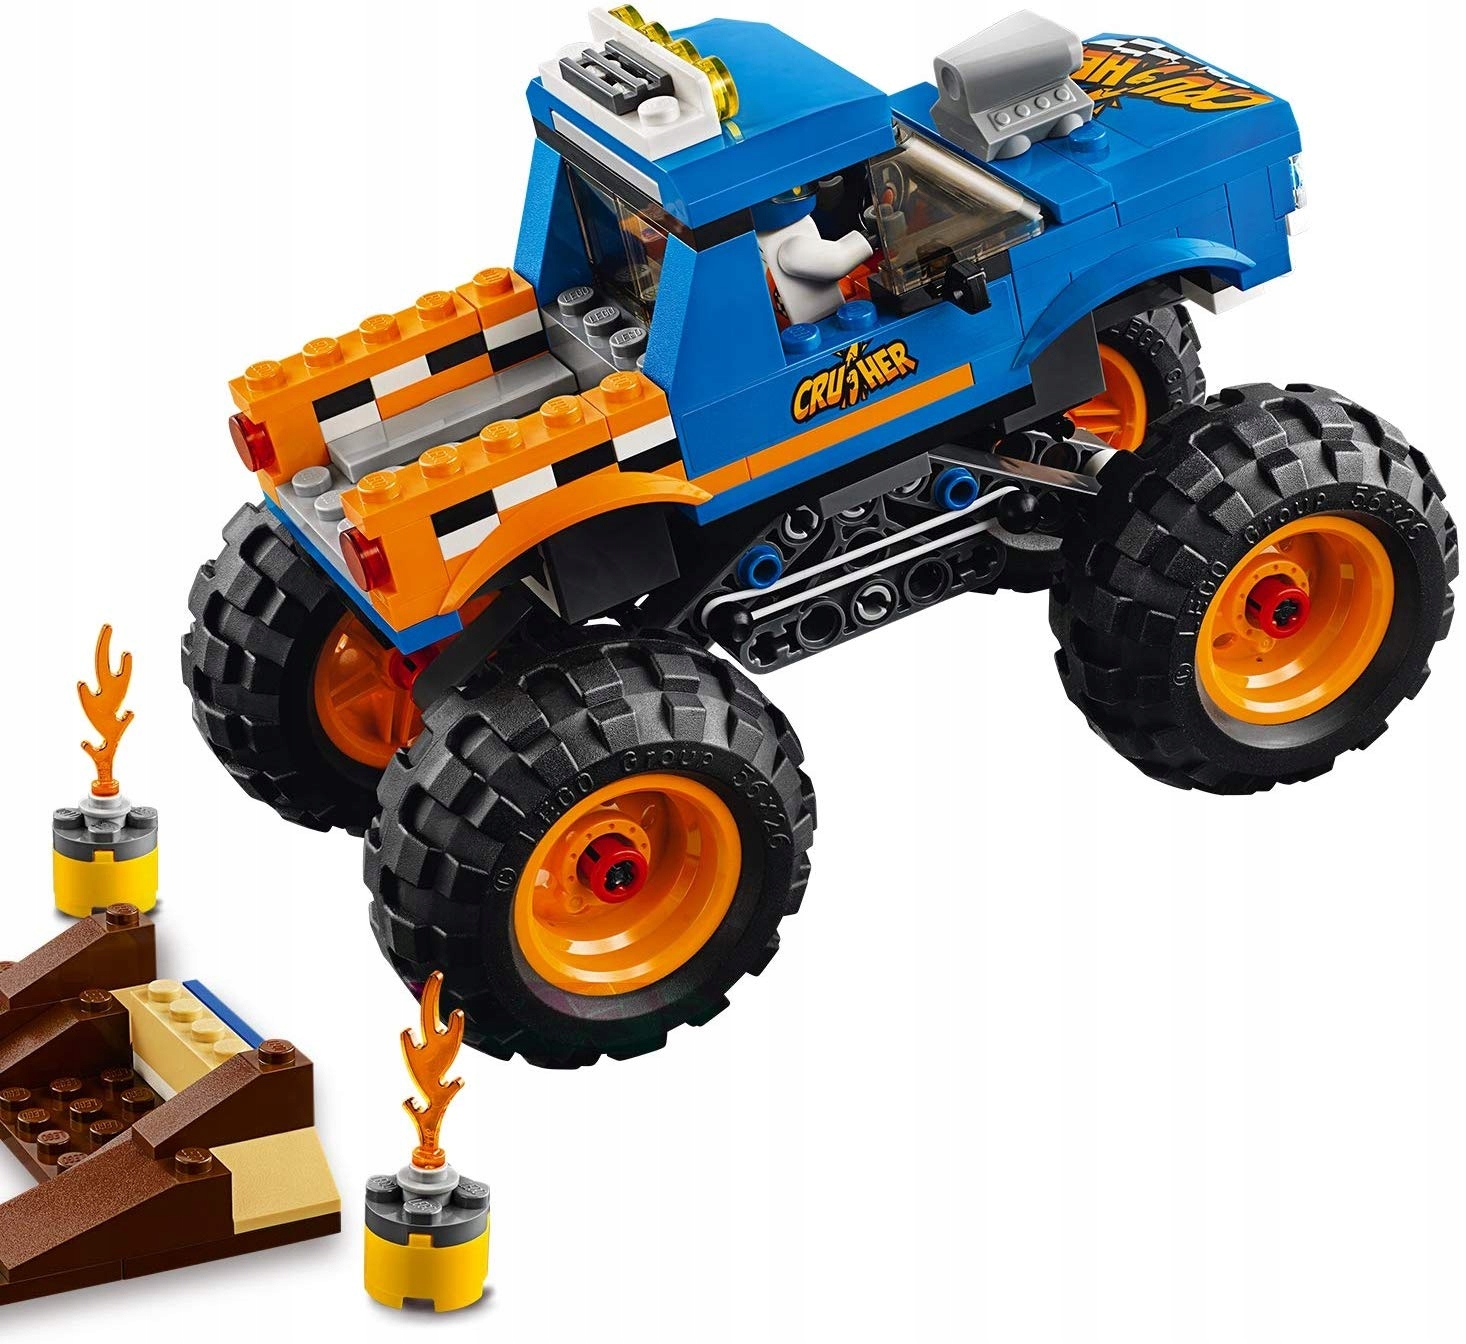  LEGO City Monster Truck 60180 Building Kit (192 Pieces